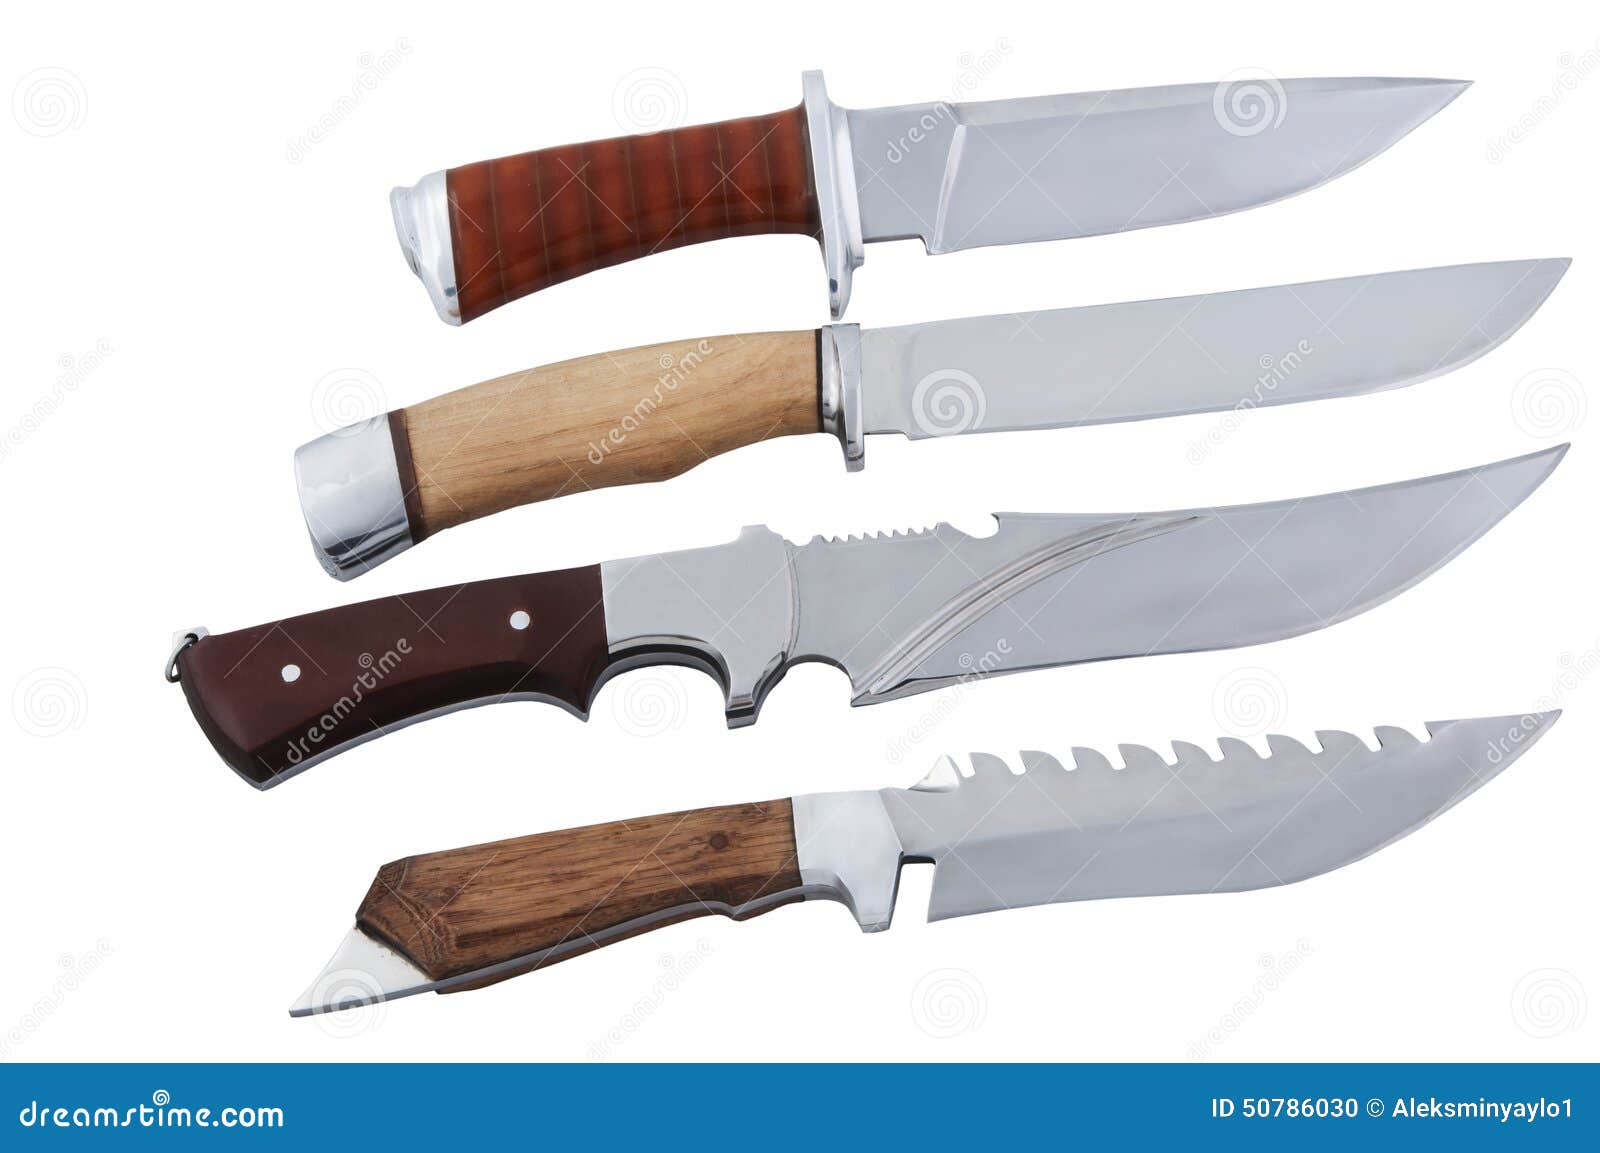 Четверо ножей. Нож на белом фоне. Набор ножей на белом фоне. Красивый нож на белом фоне. Острый нож на белом фоне.